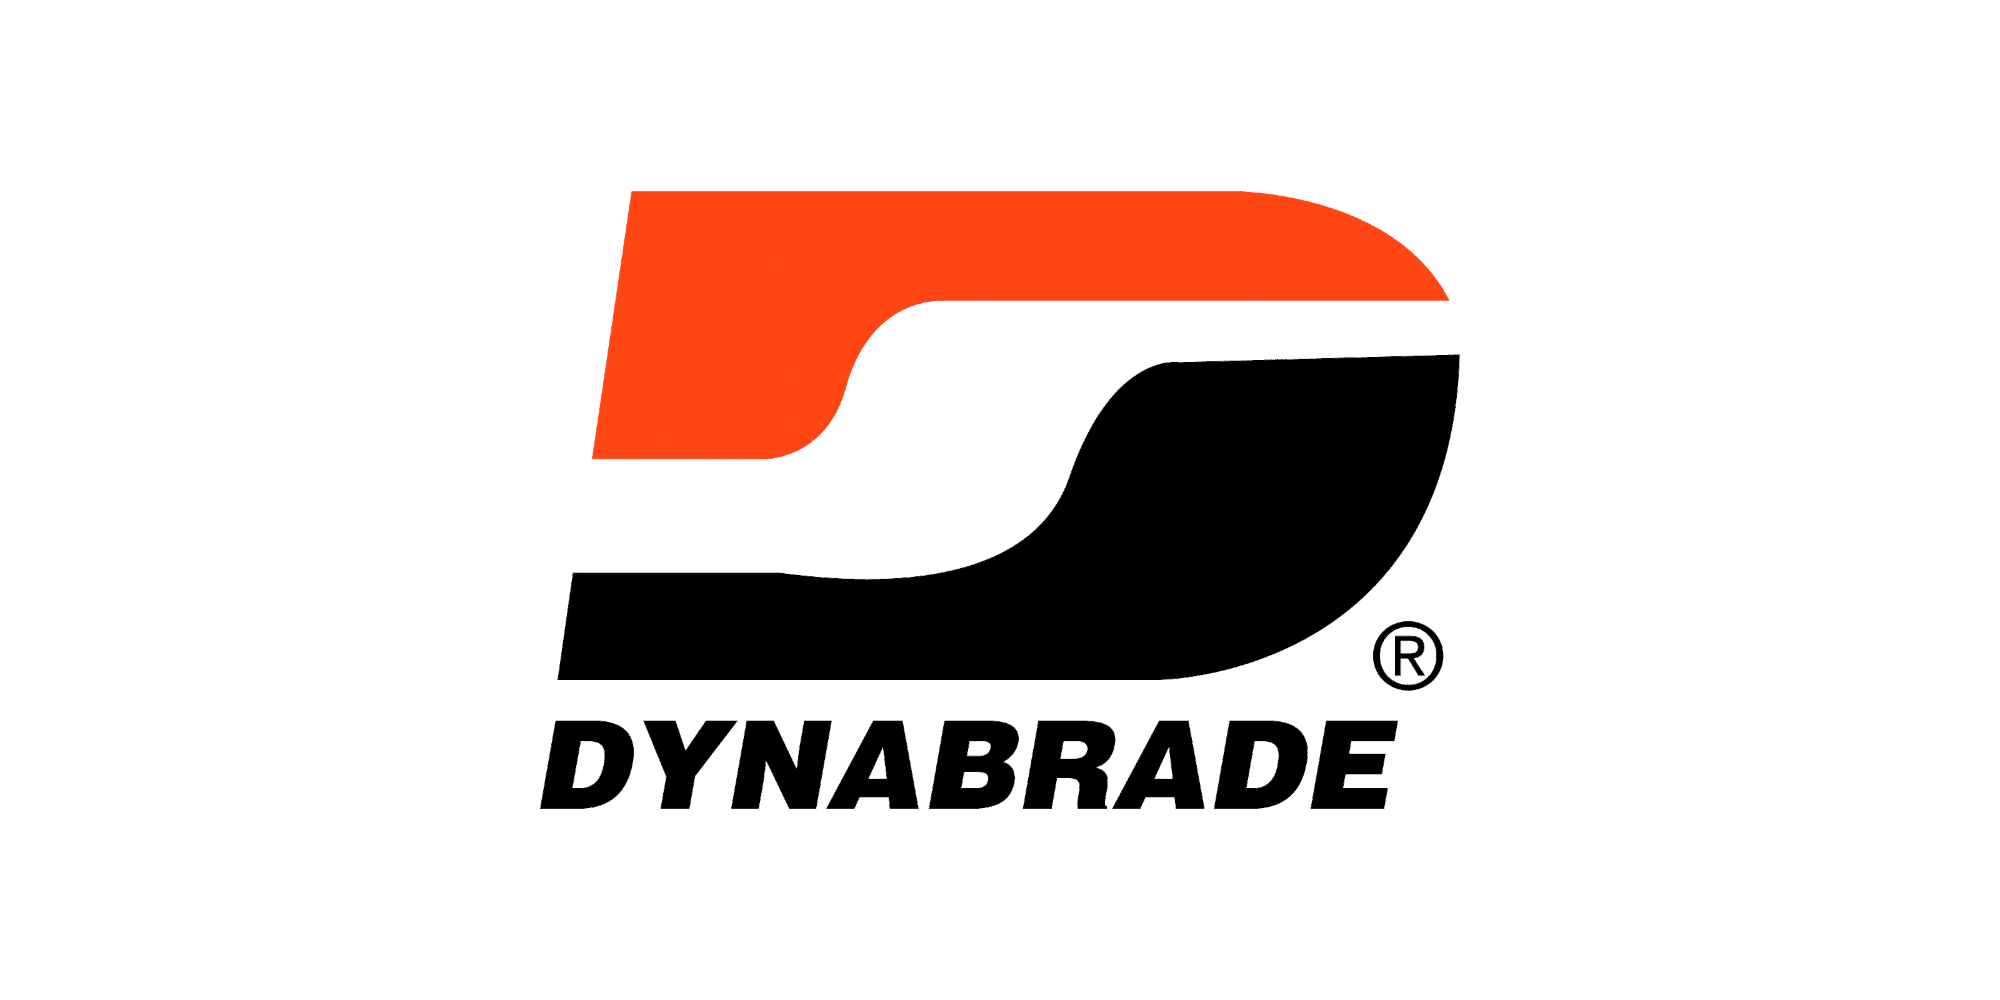 Dynabrade-Logo